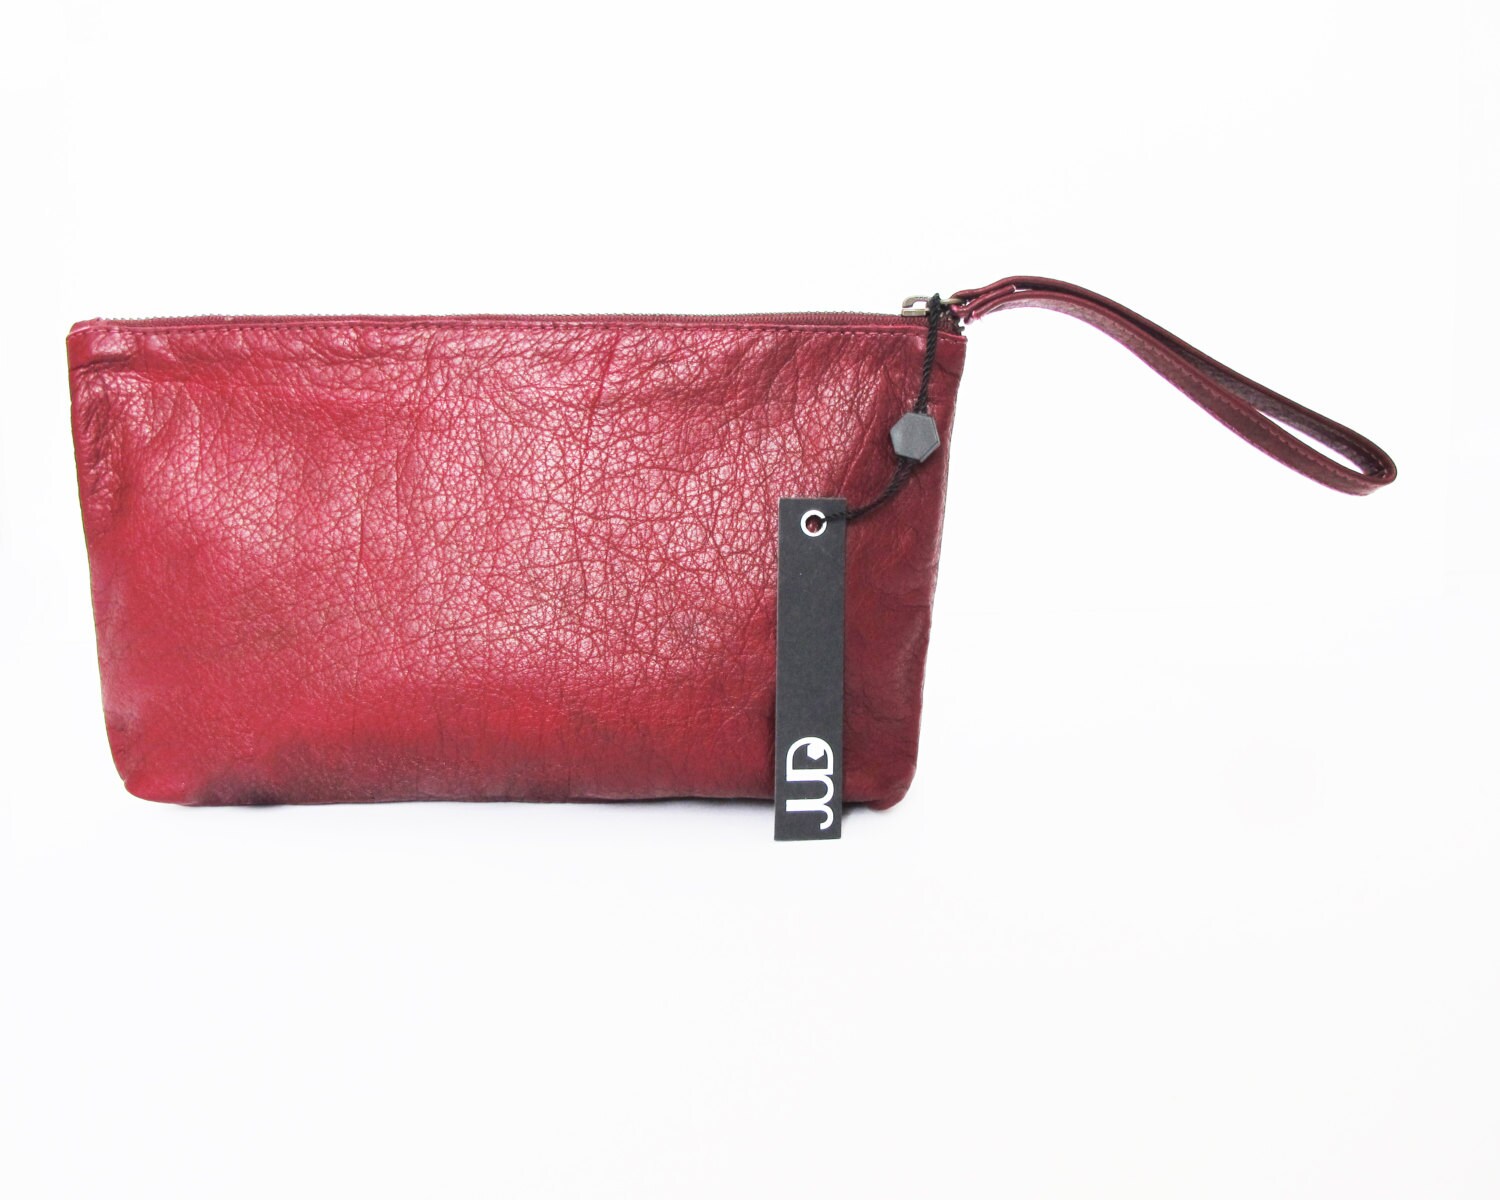 Bordeaux red leather clutch purse SALE soft leather purse